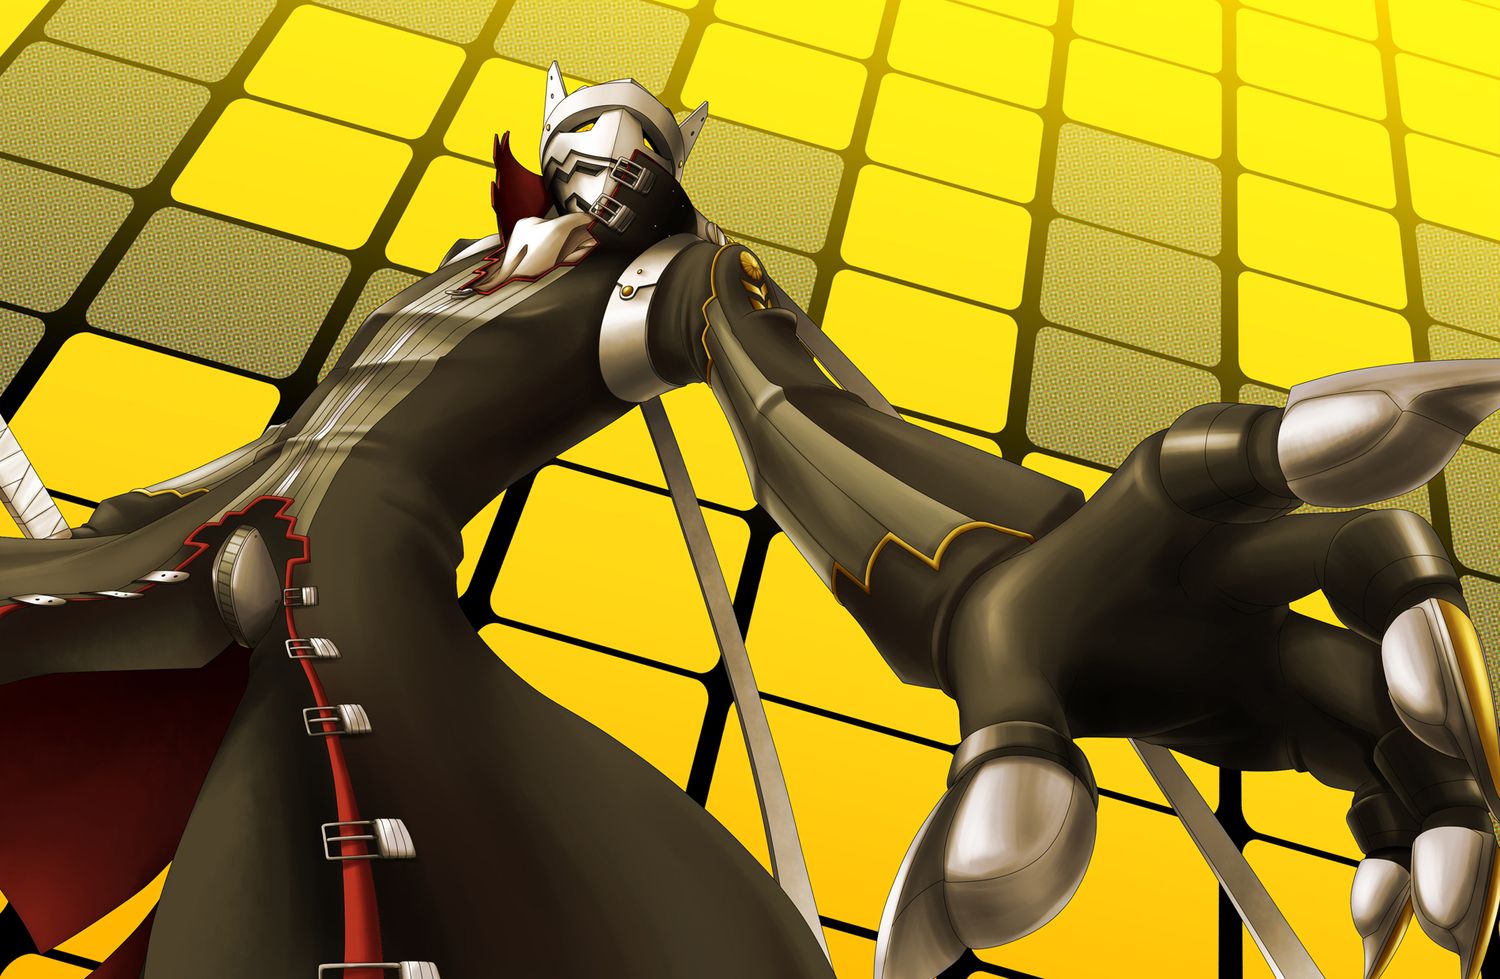 Persona 4 Computer Wallpapers, Desktop Backgrounds | 1500x979 | ID ...